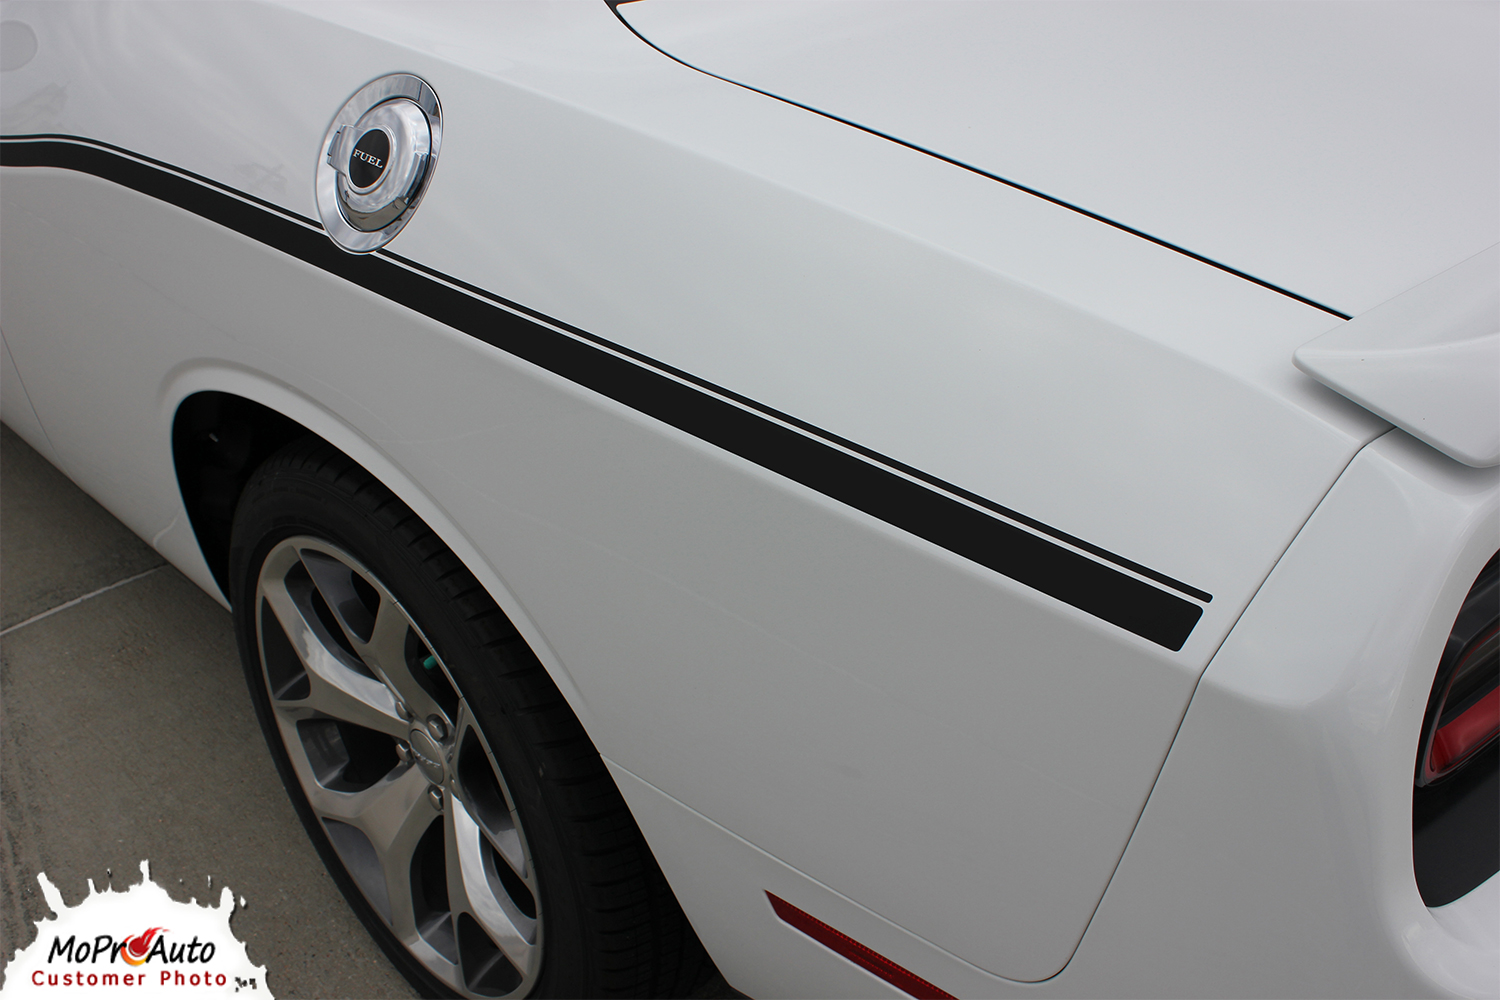 Dodge Challenger SXT Side Stripes 2011, 2012, 2013, 2014, 2015, 2016, 2017, 2018, 2019, 2020, 2021, 2022, 2023  Decals Vinyl Graphics